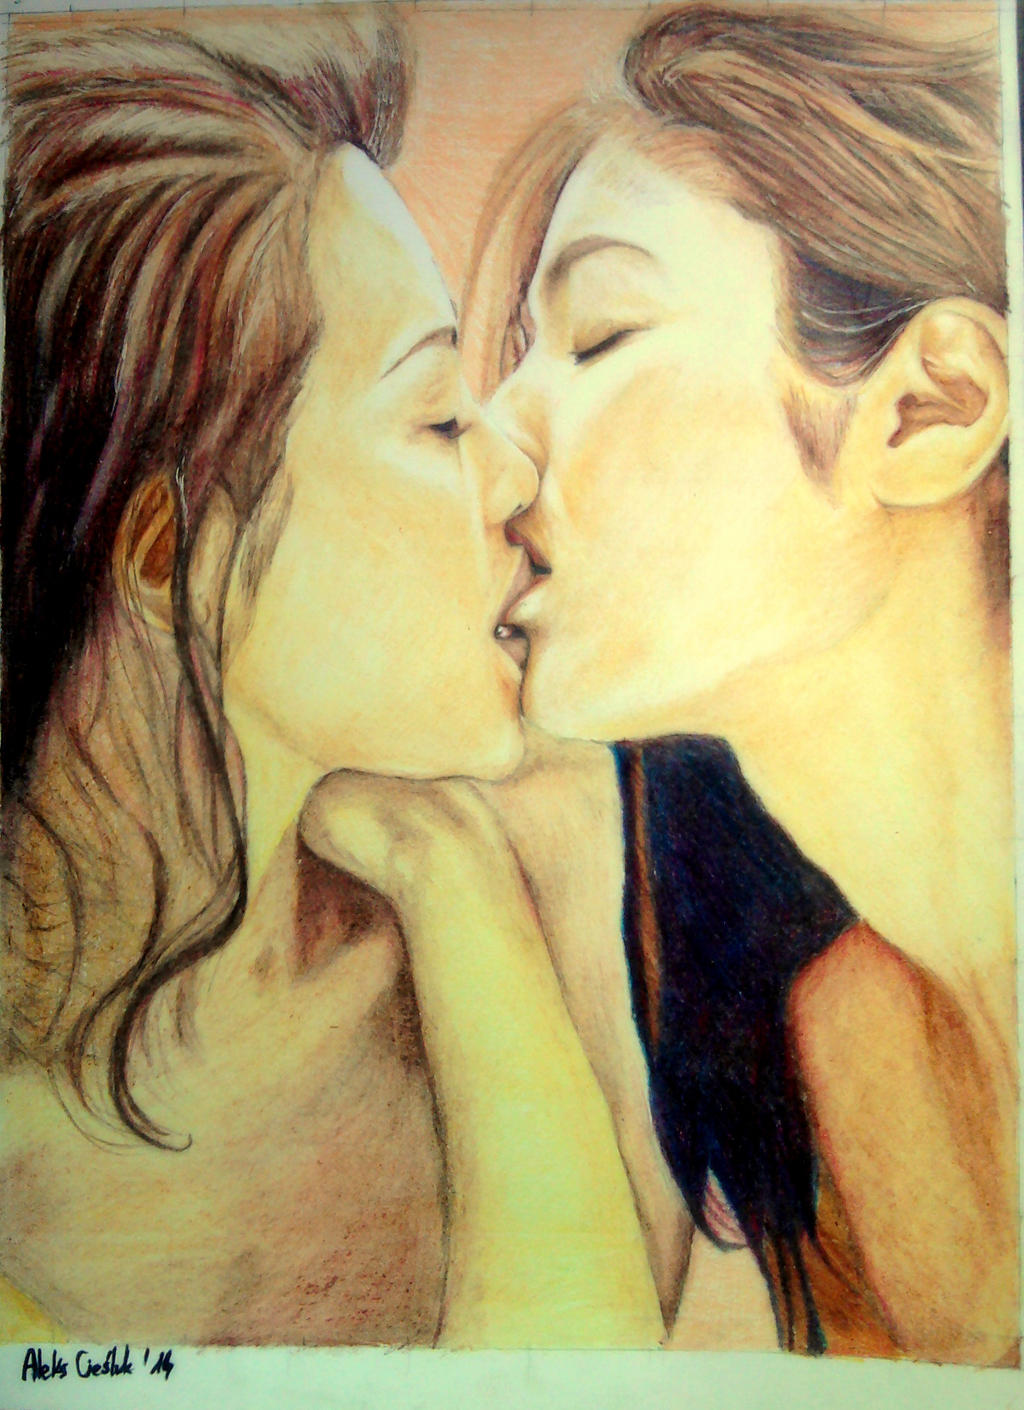 Lesbian Kissing Turns Into Sex